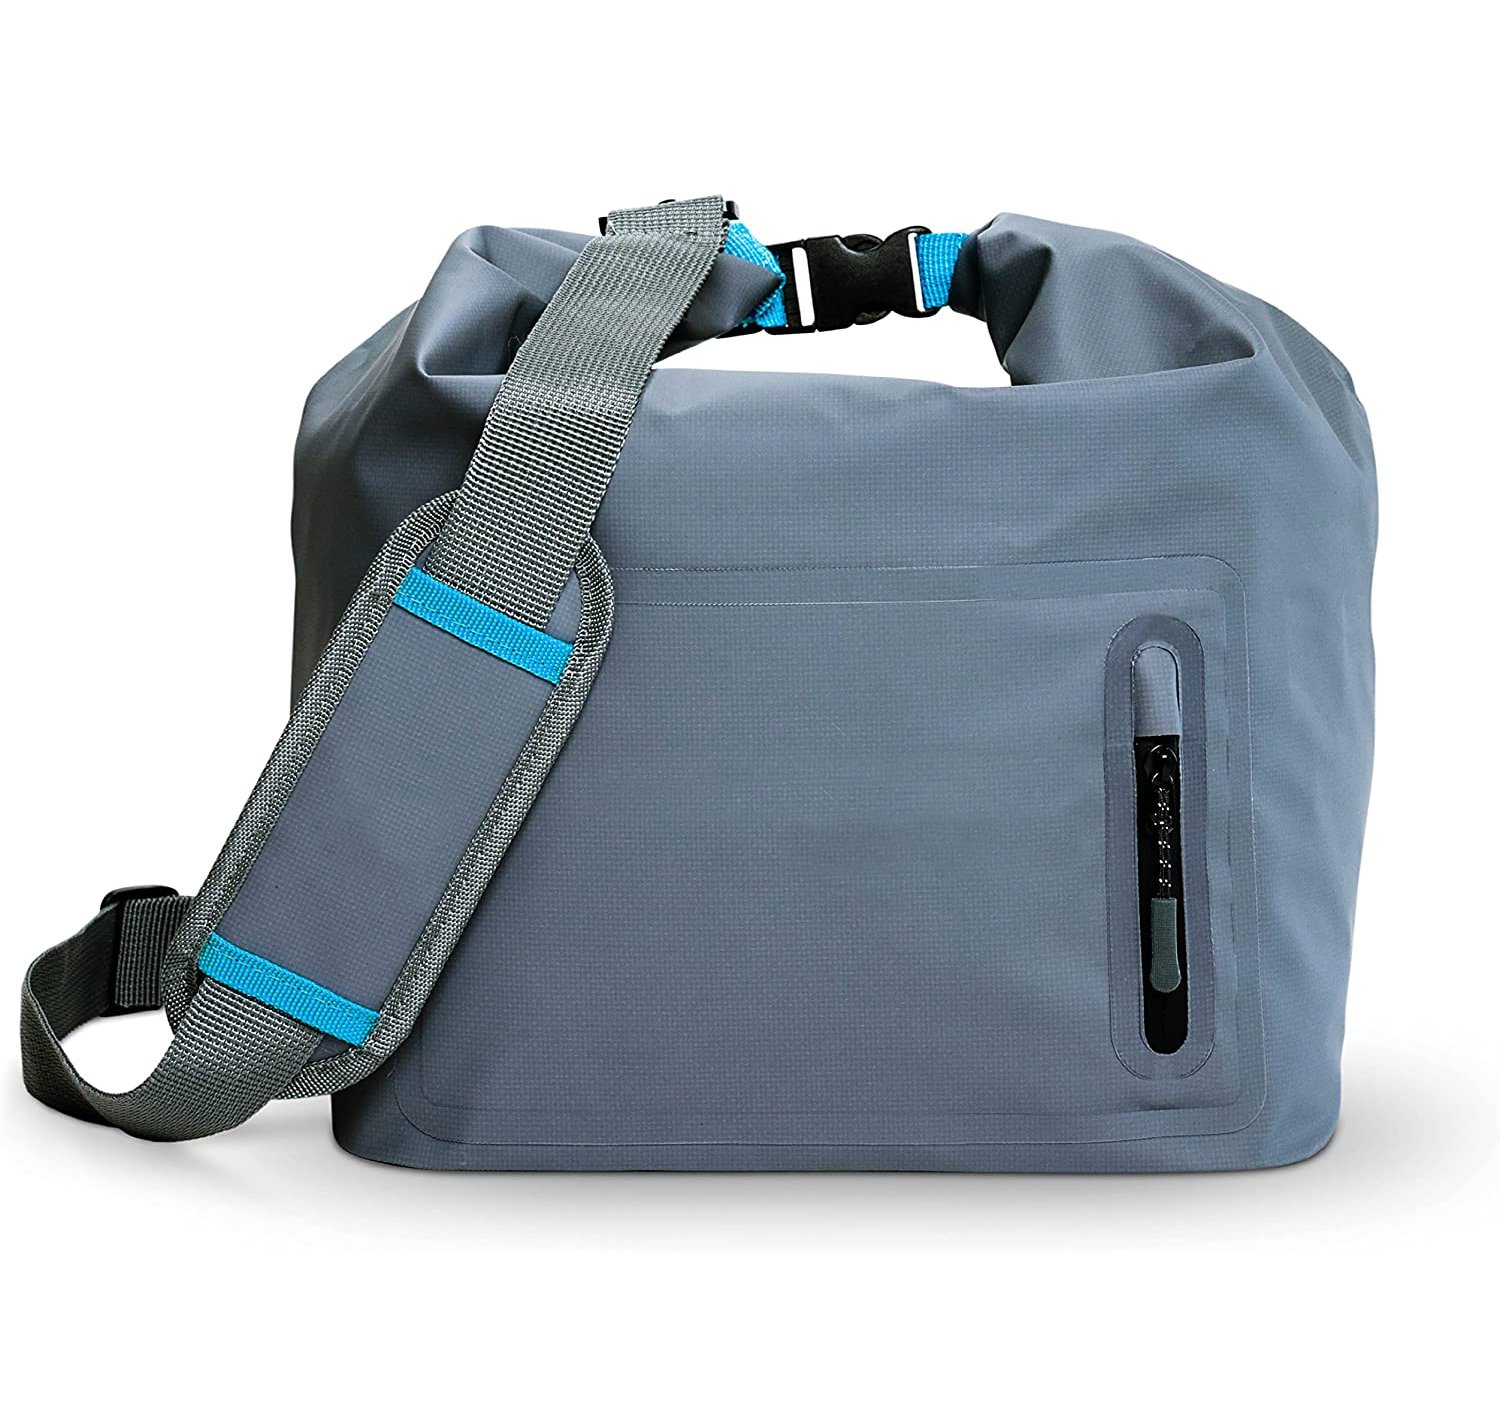 Cooler Bag-Insulated, Waterproof&Leakproof Cooler, Camping Cooler, Kayak Cooler, Travel cooler